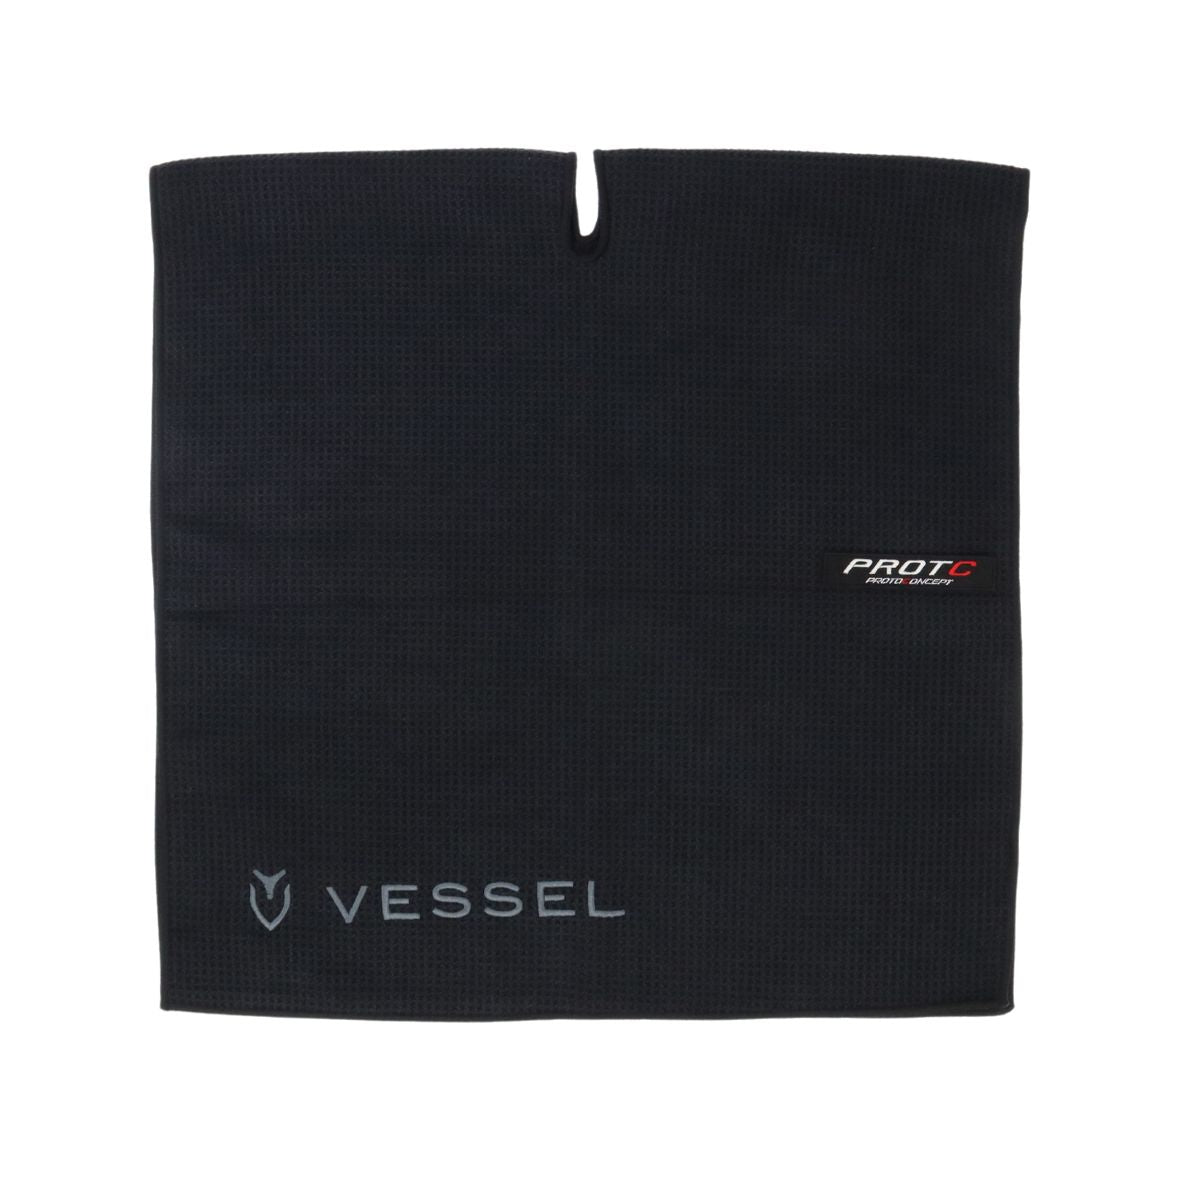 VESSEL×PROTOCONCEPT Magnetic Golf Towel | Proto-Concept USA